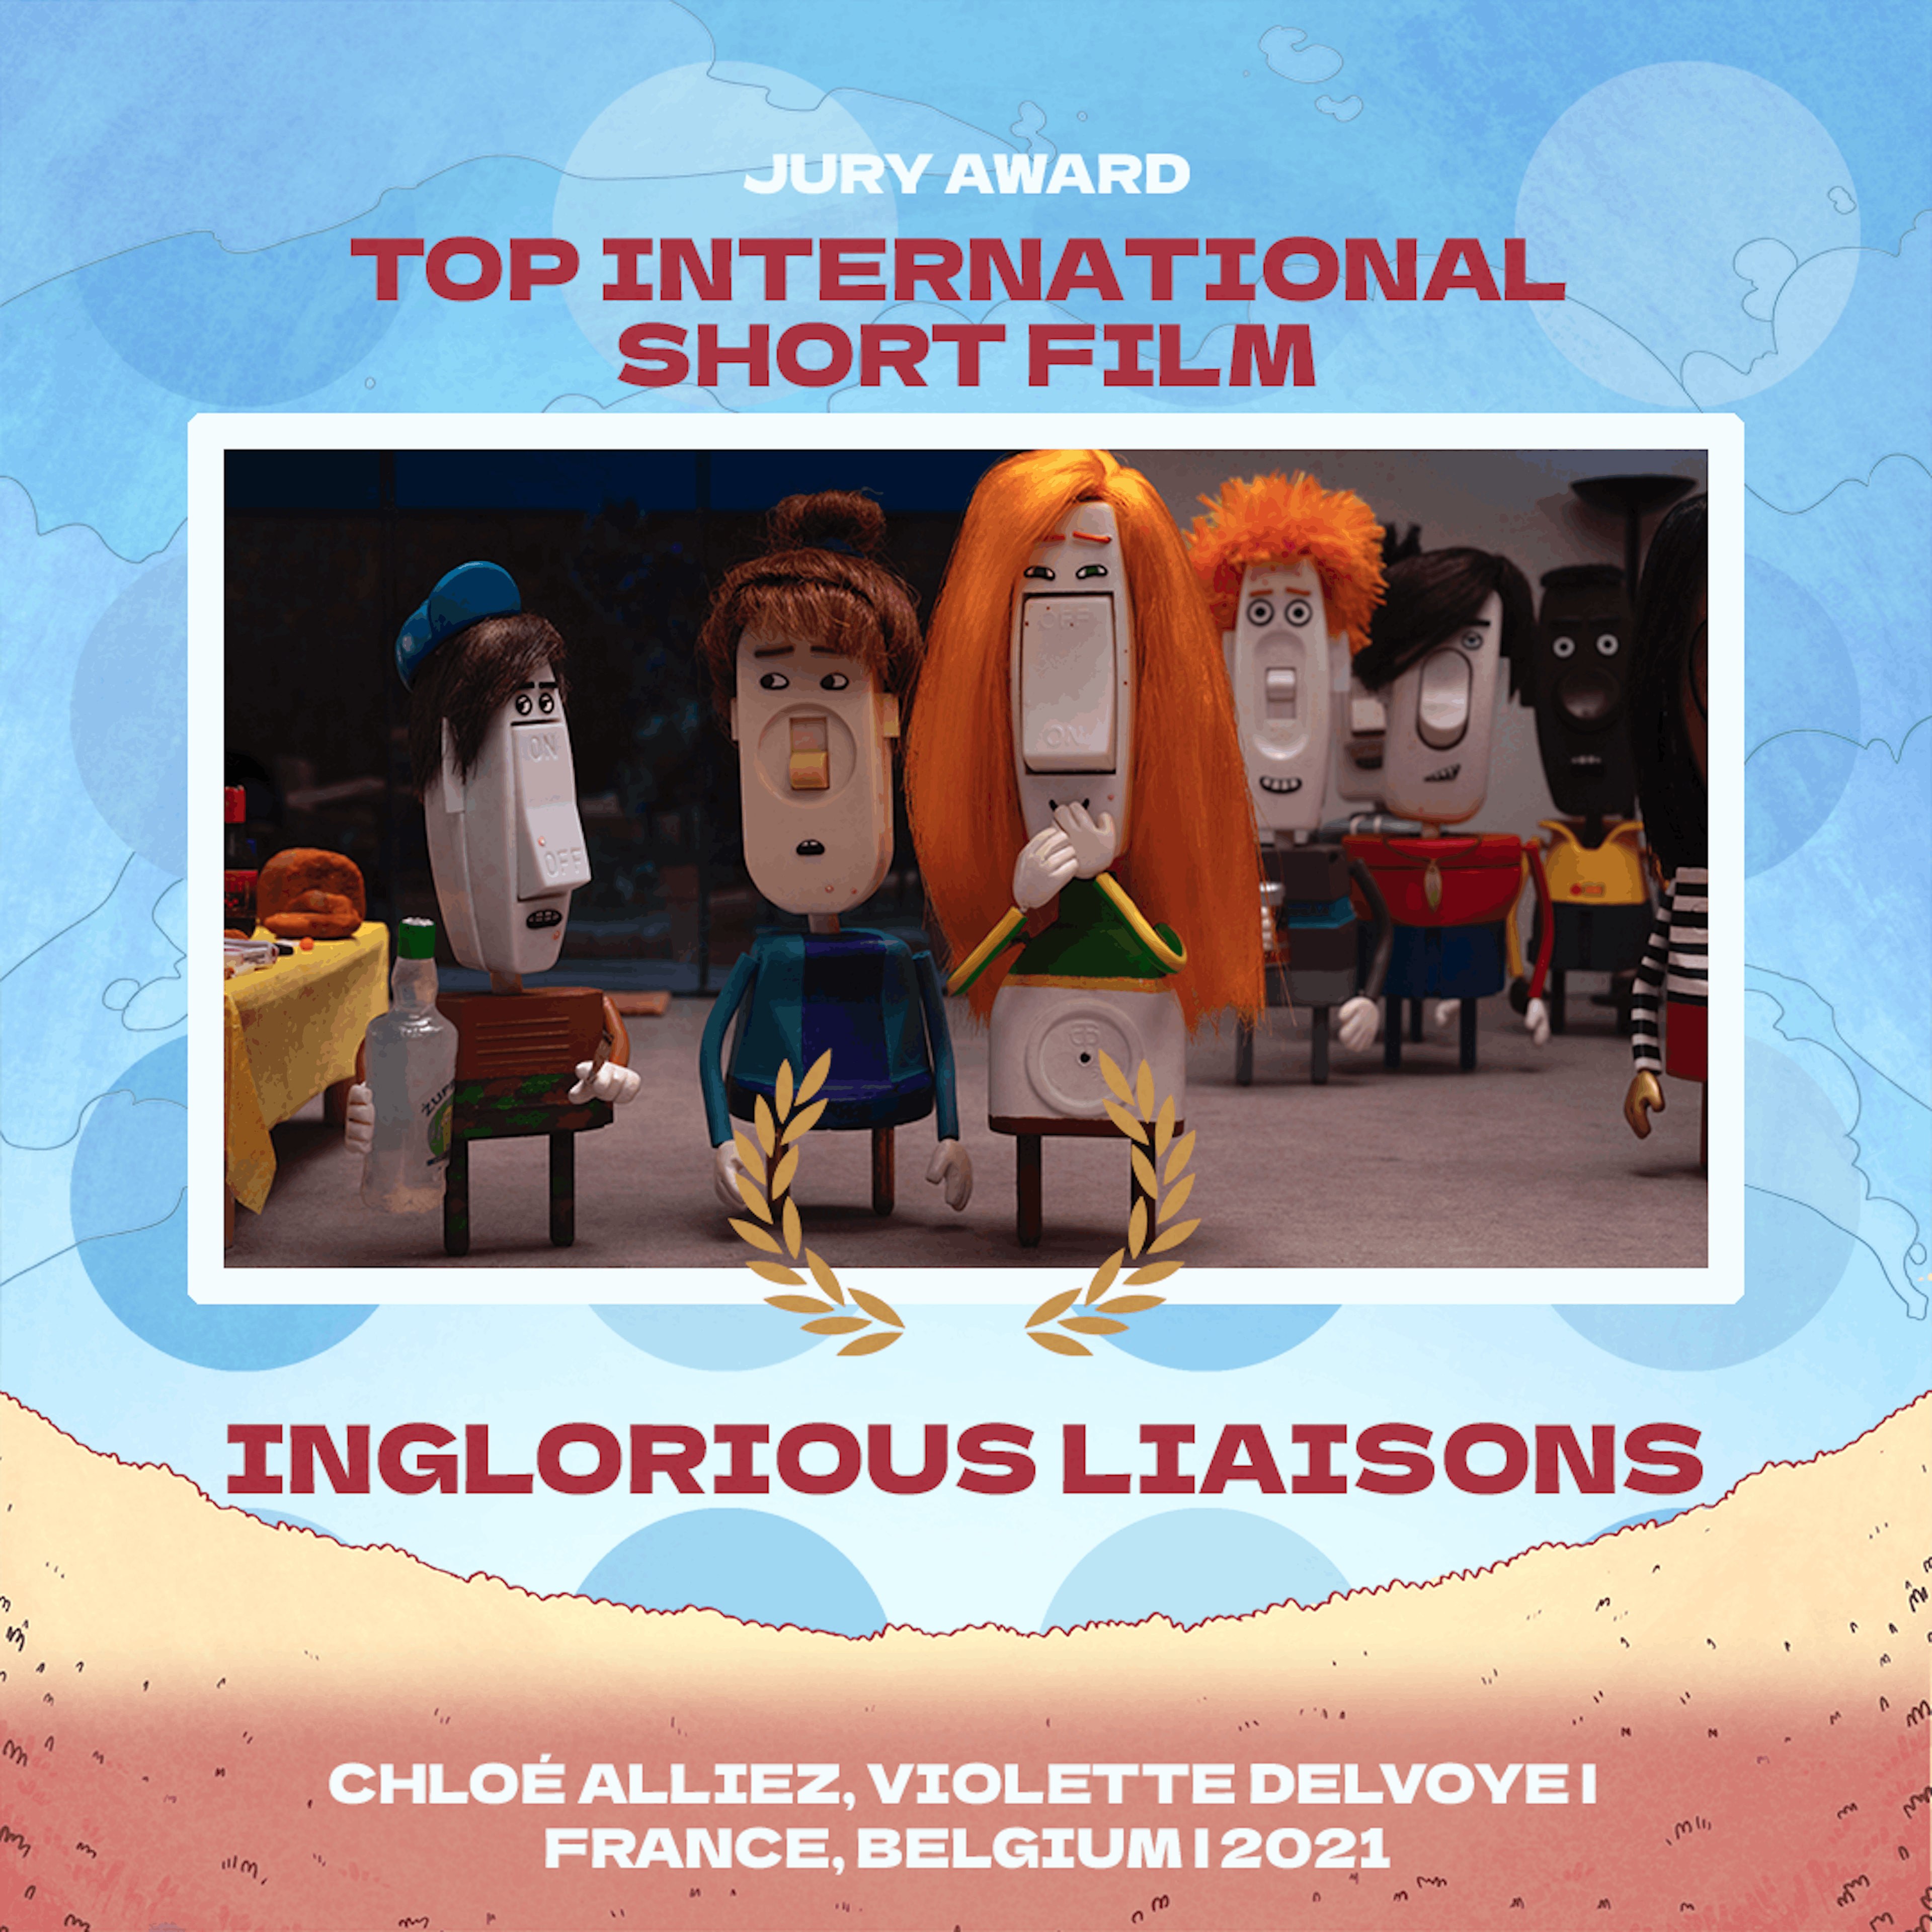 Text reads: 
JURY AWARD
Top International Short Film
Inglorious Liasons
Chloe Alliez Violette Delvoyei, France, Belgium, 2021